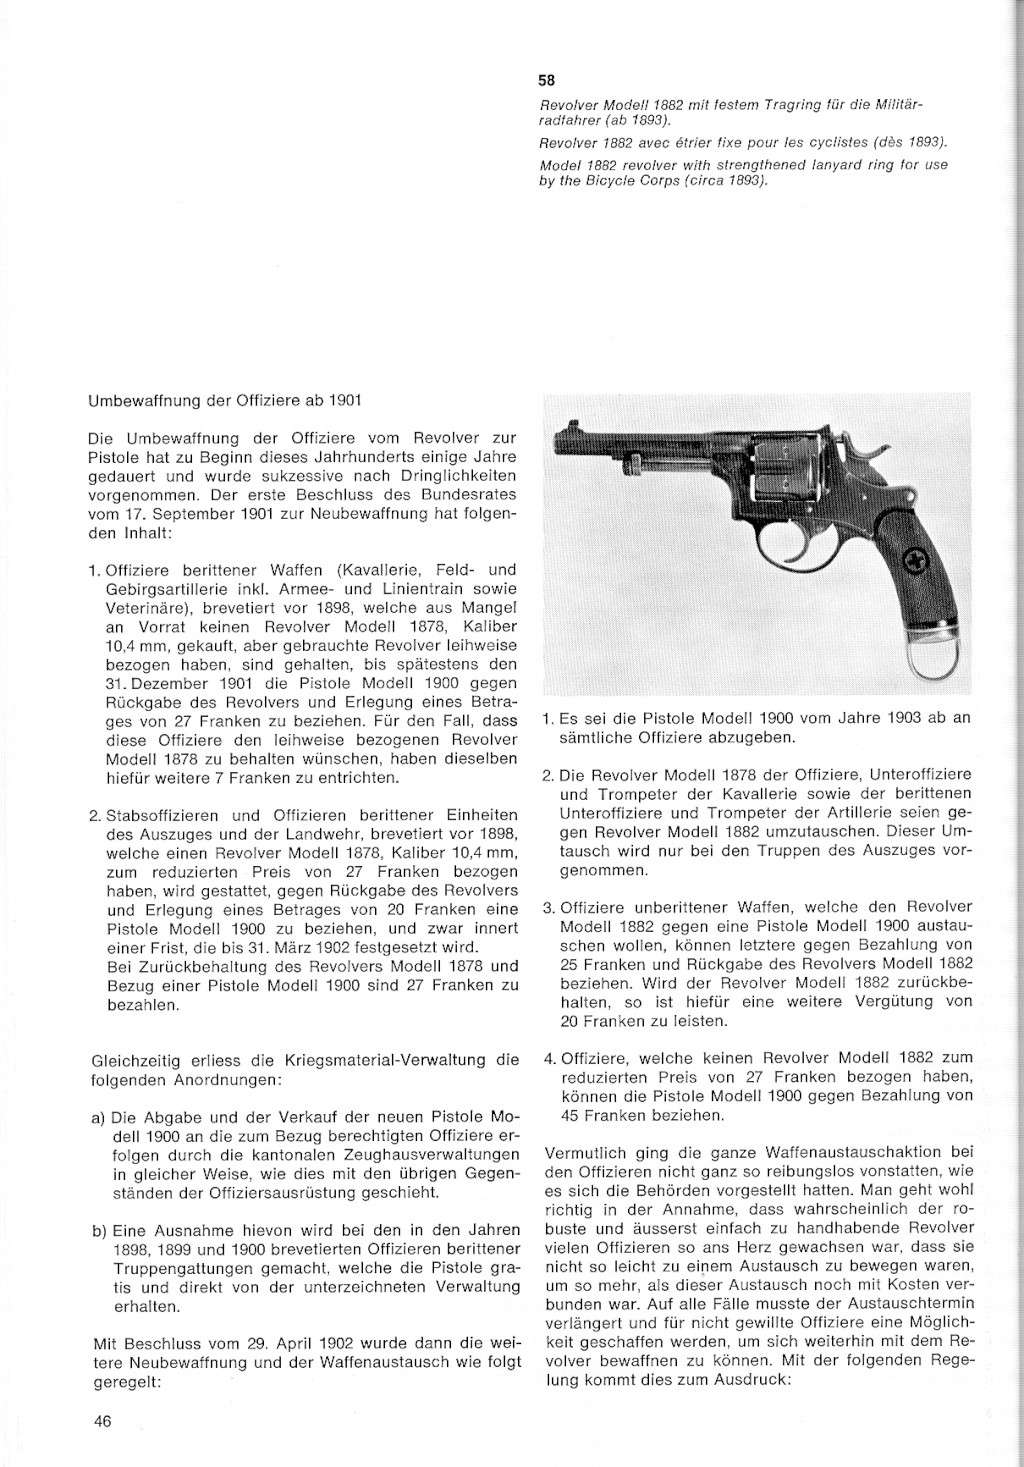 revolver SR 1882 et SR 1882-29, demande de renseignements 4610